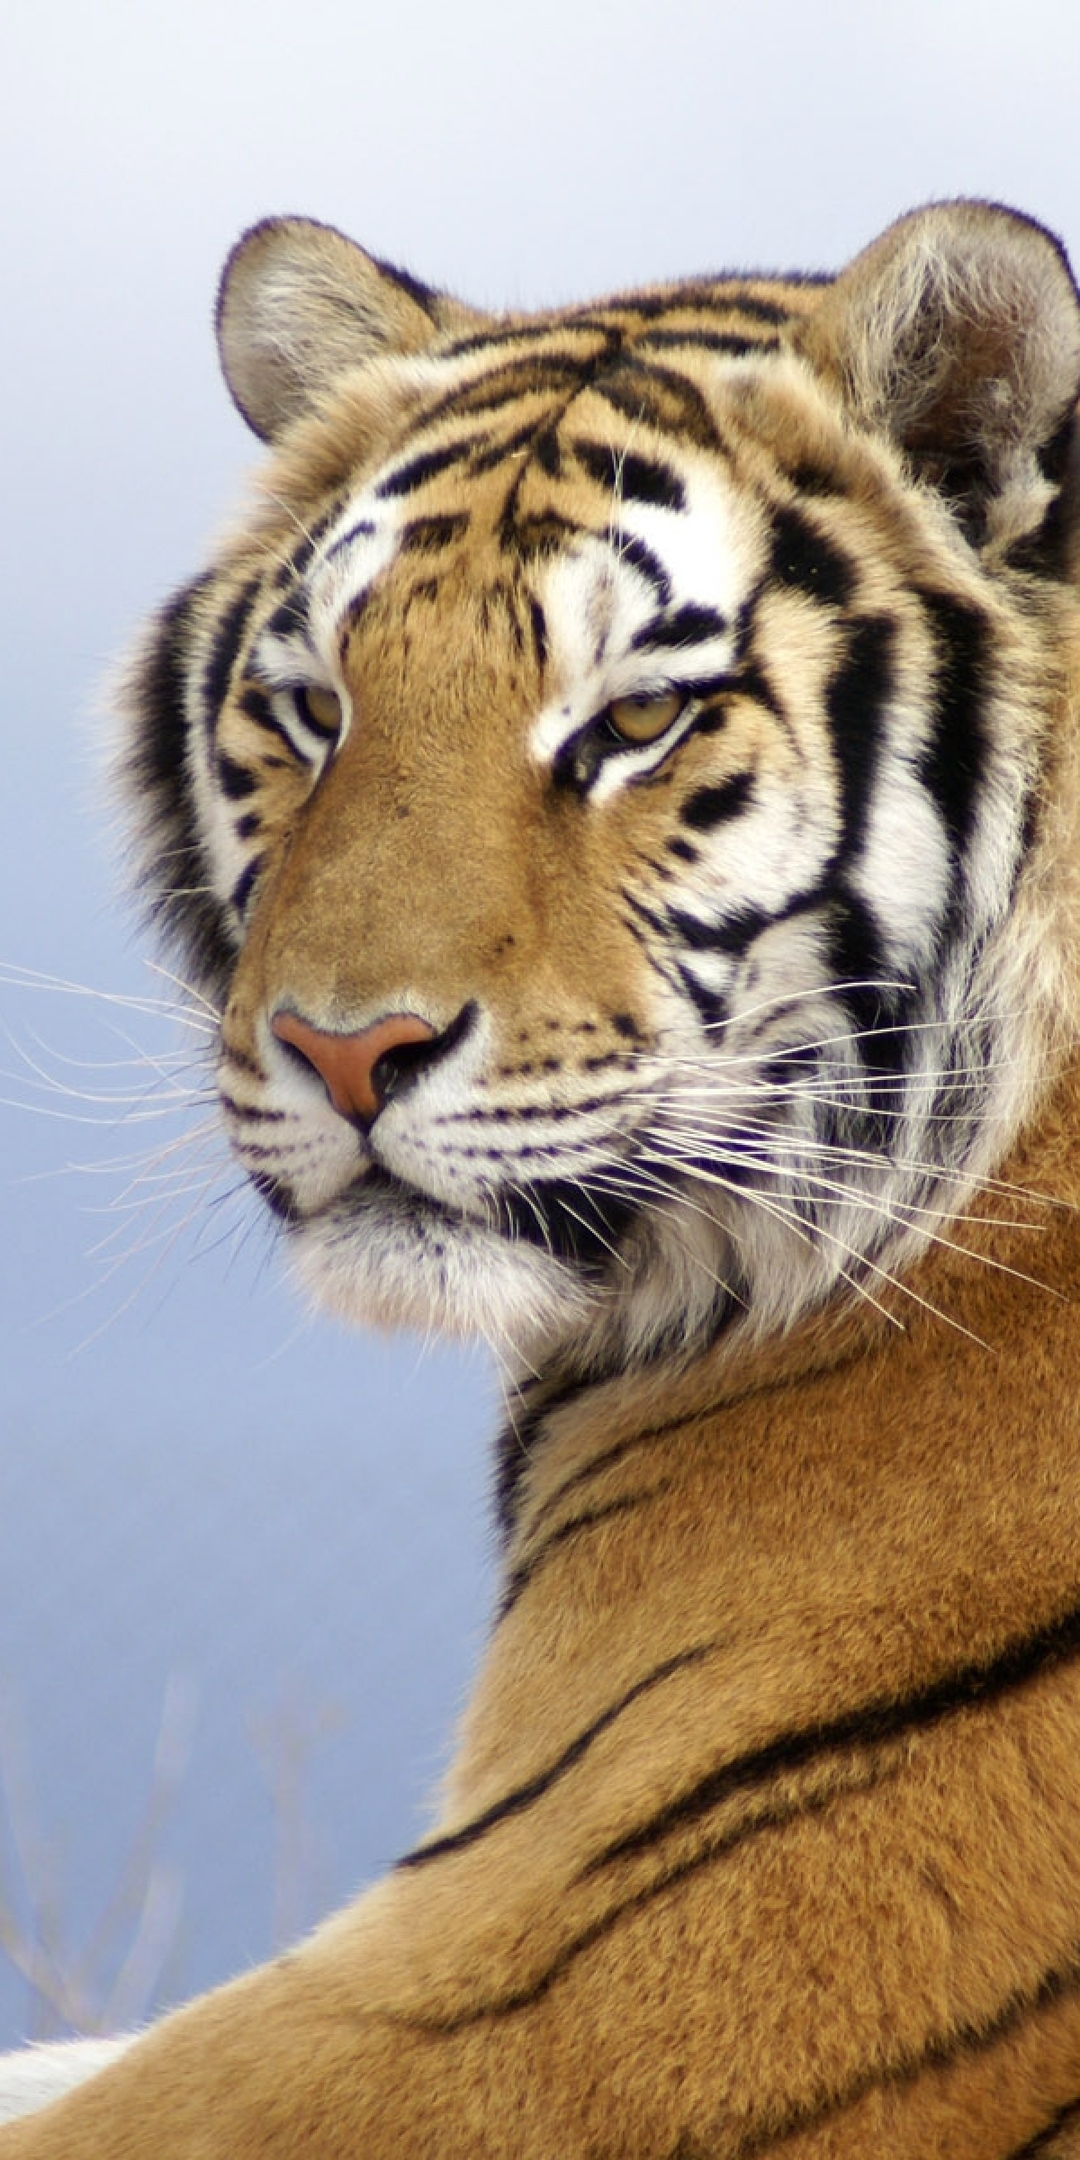 Image: Cat, large, Tiger, striped, Amur, look, predator, muzzle